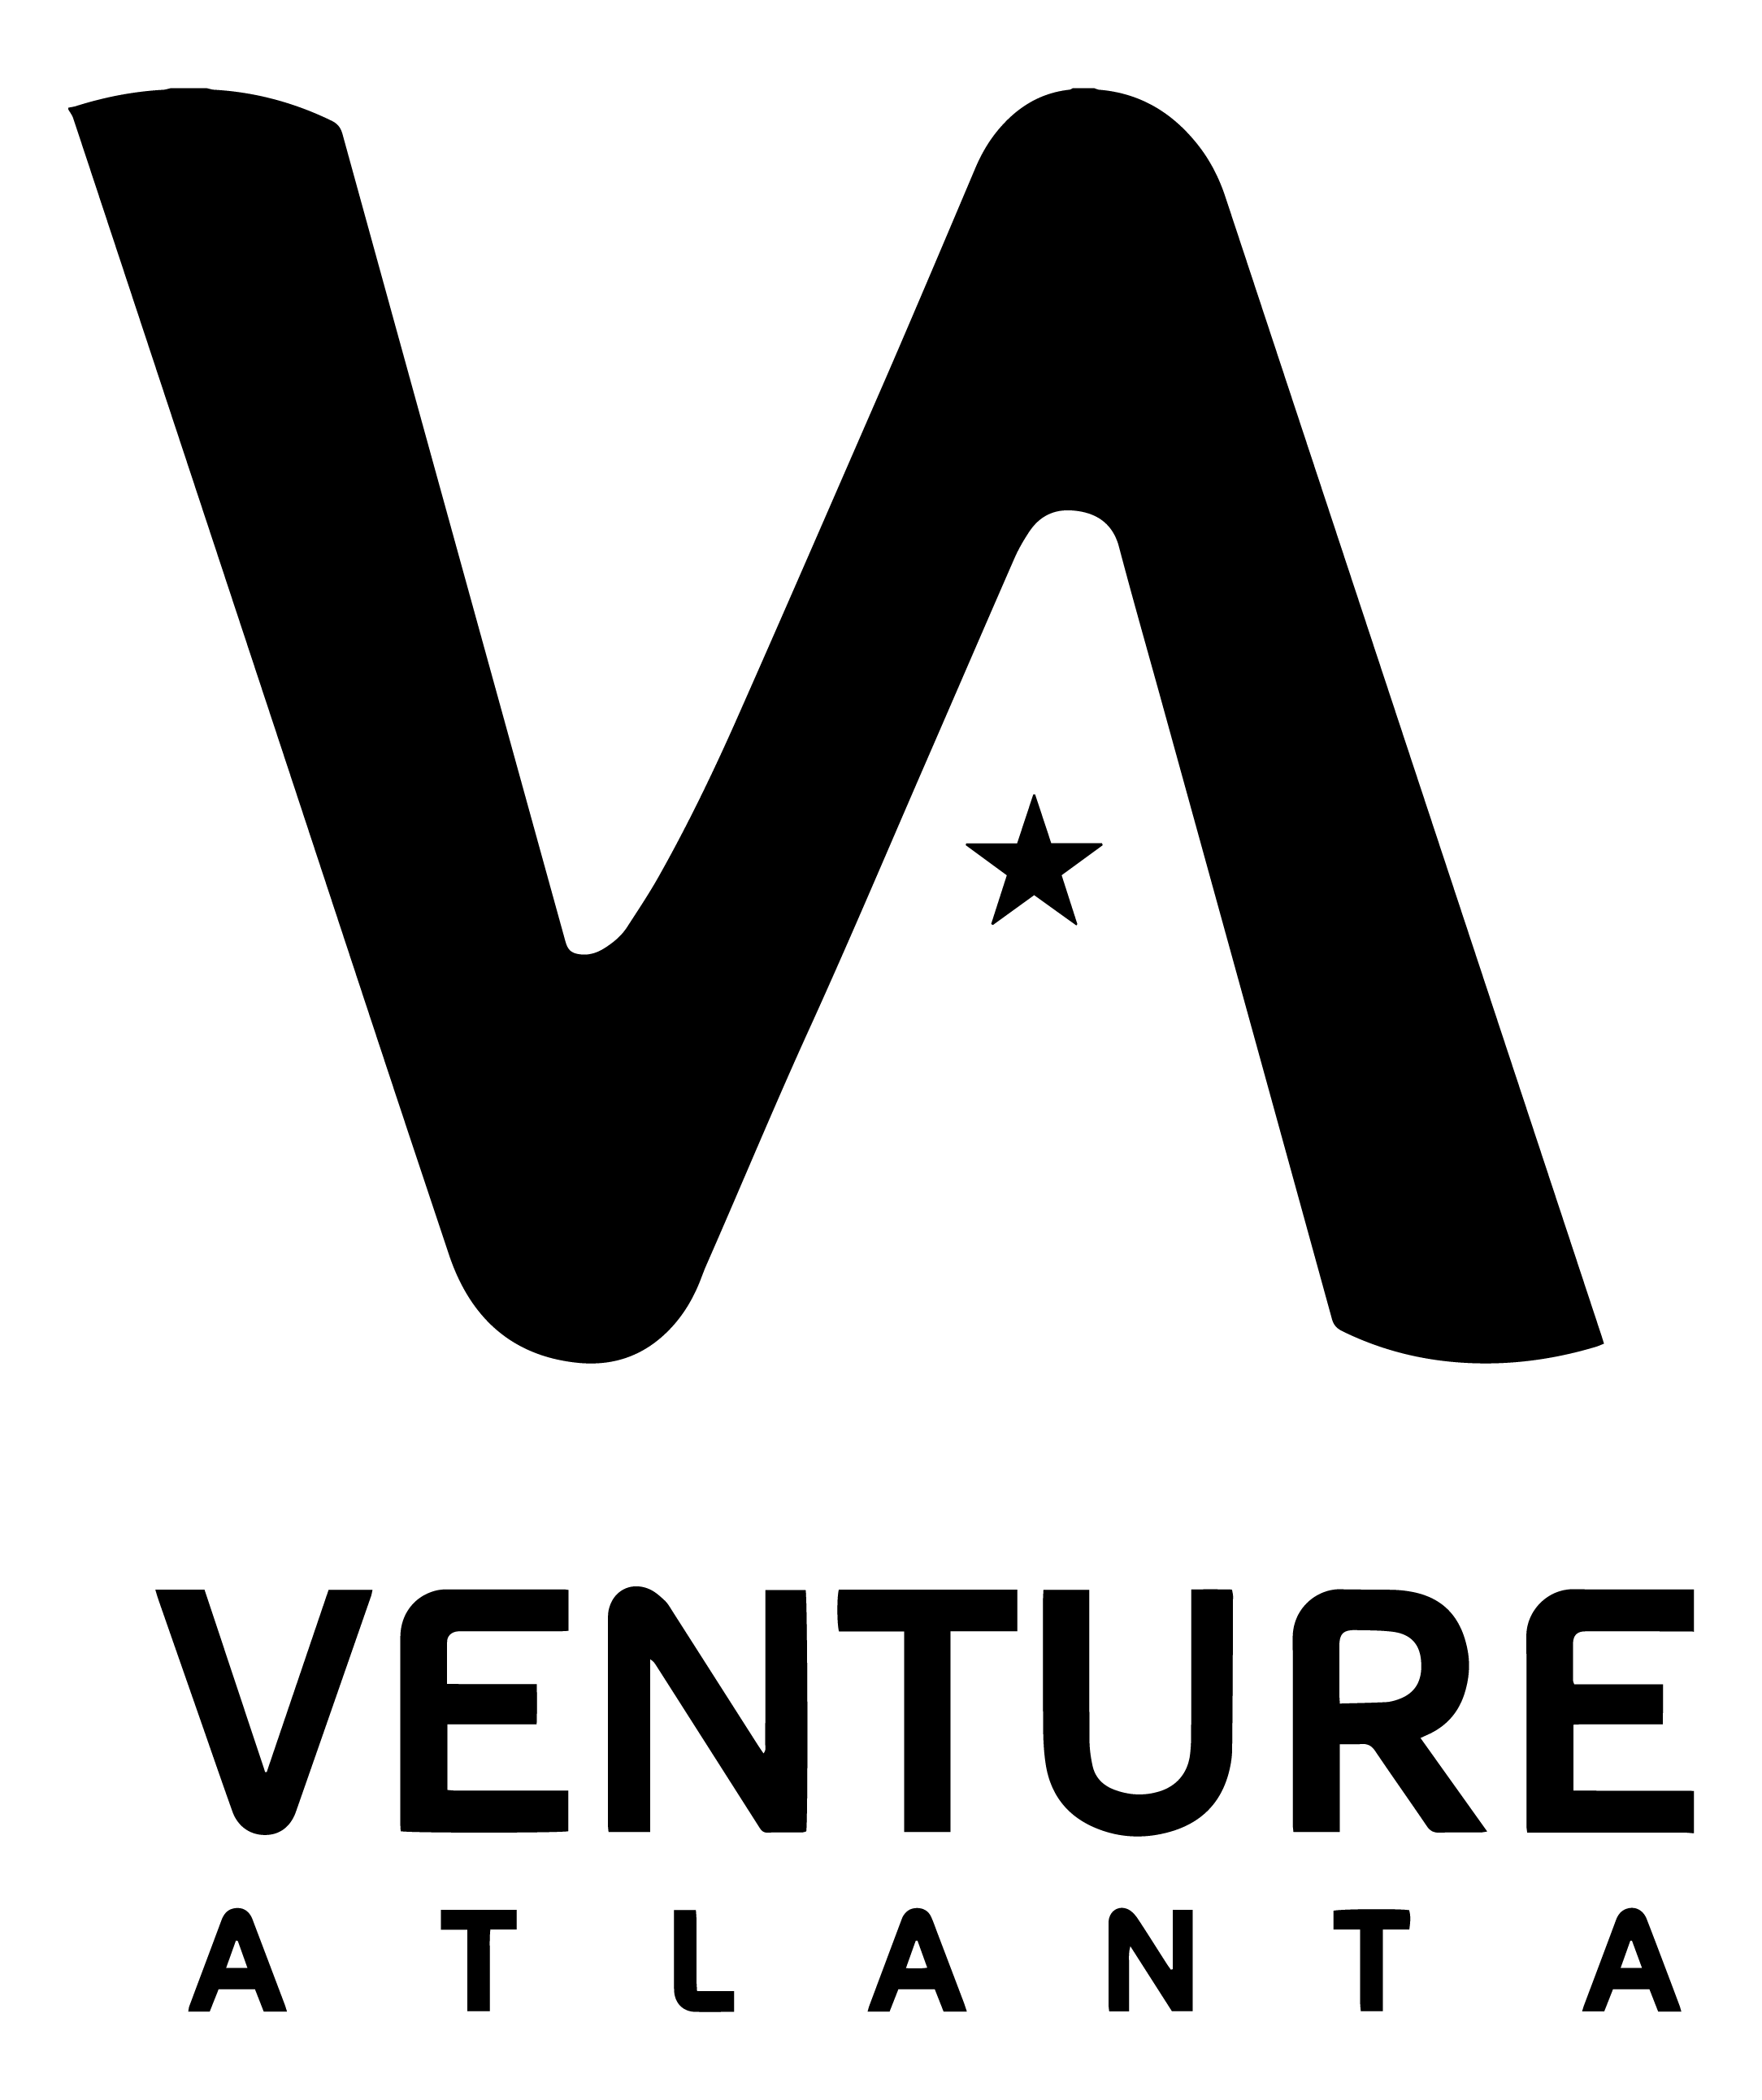 Venture Atlanta Logo